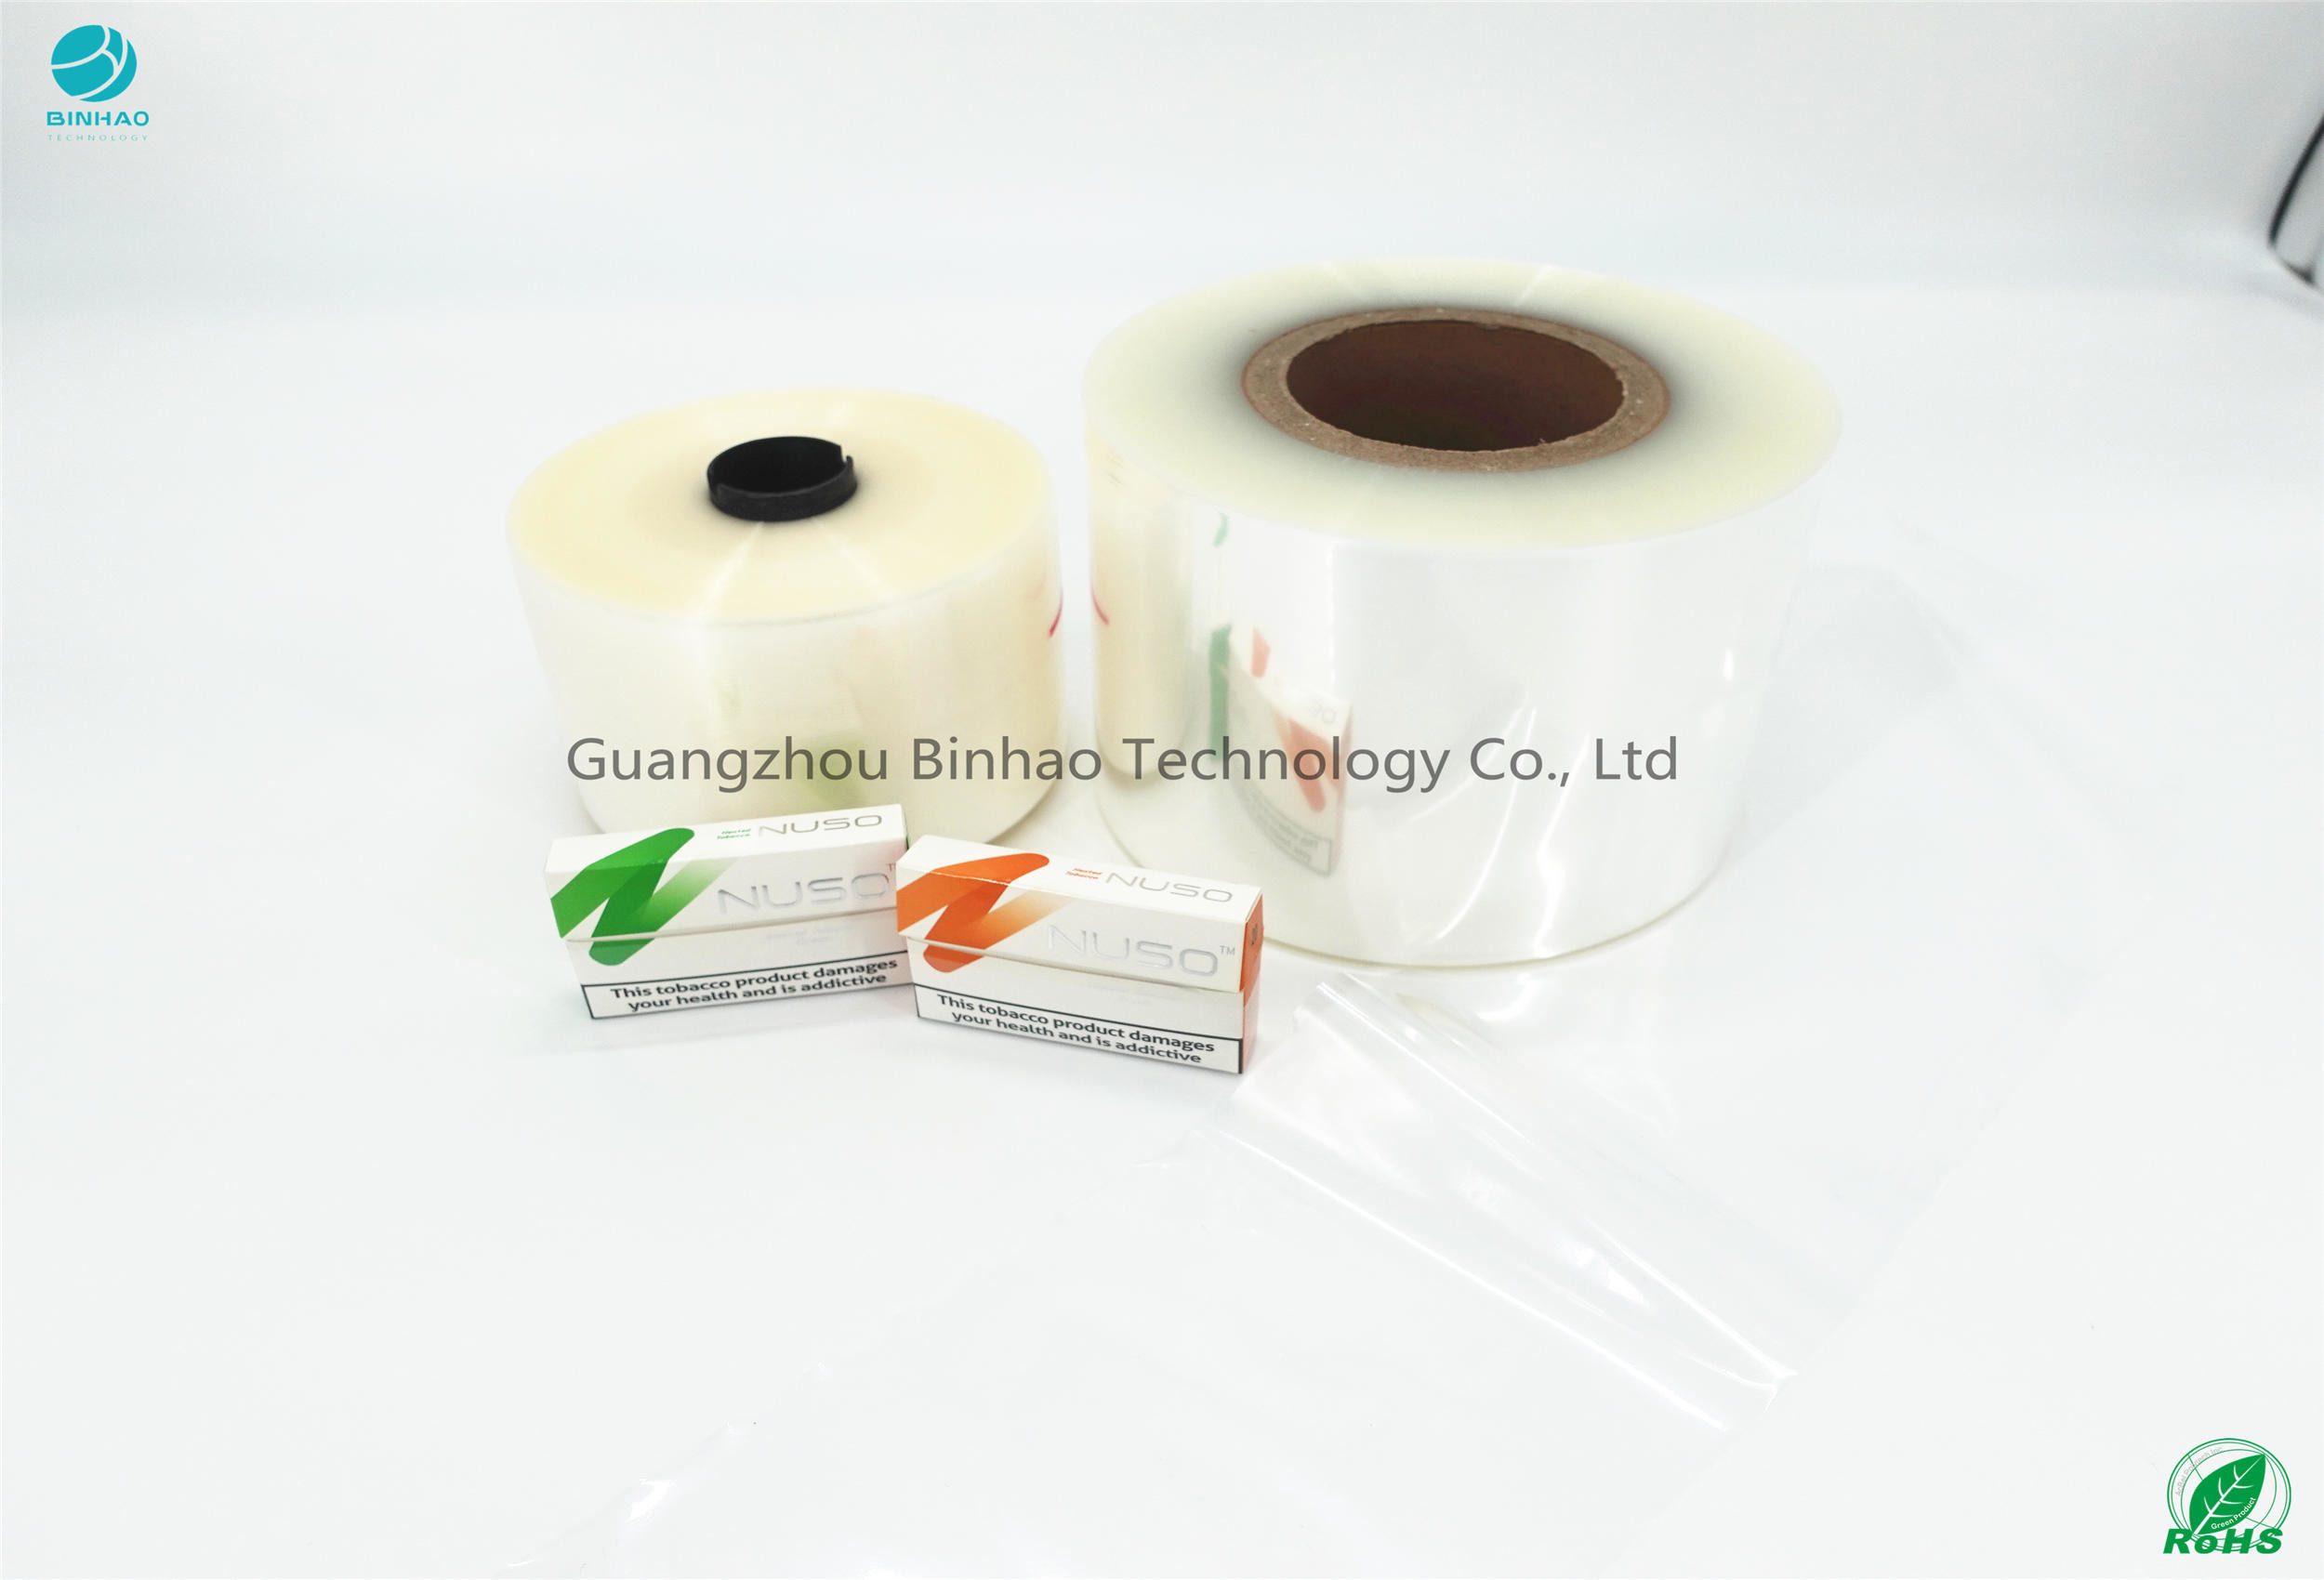 Cellophane HNB E-Cigareatte بسته بندی مواد دمای آب بندی 120 درجه سانتیگراد